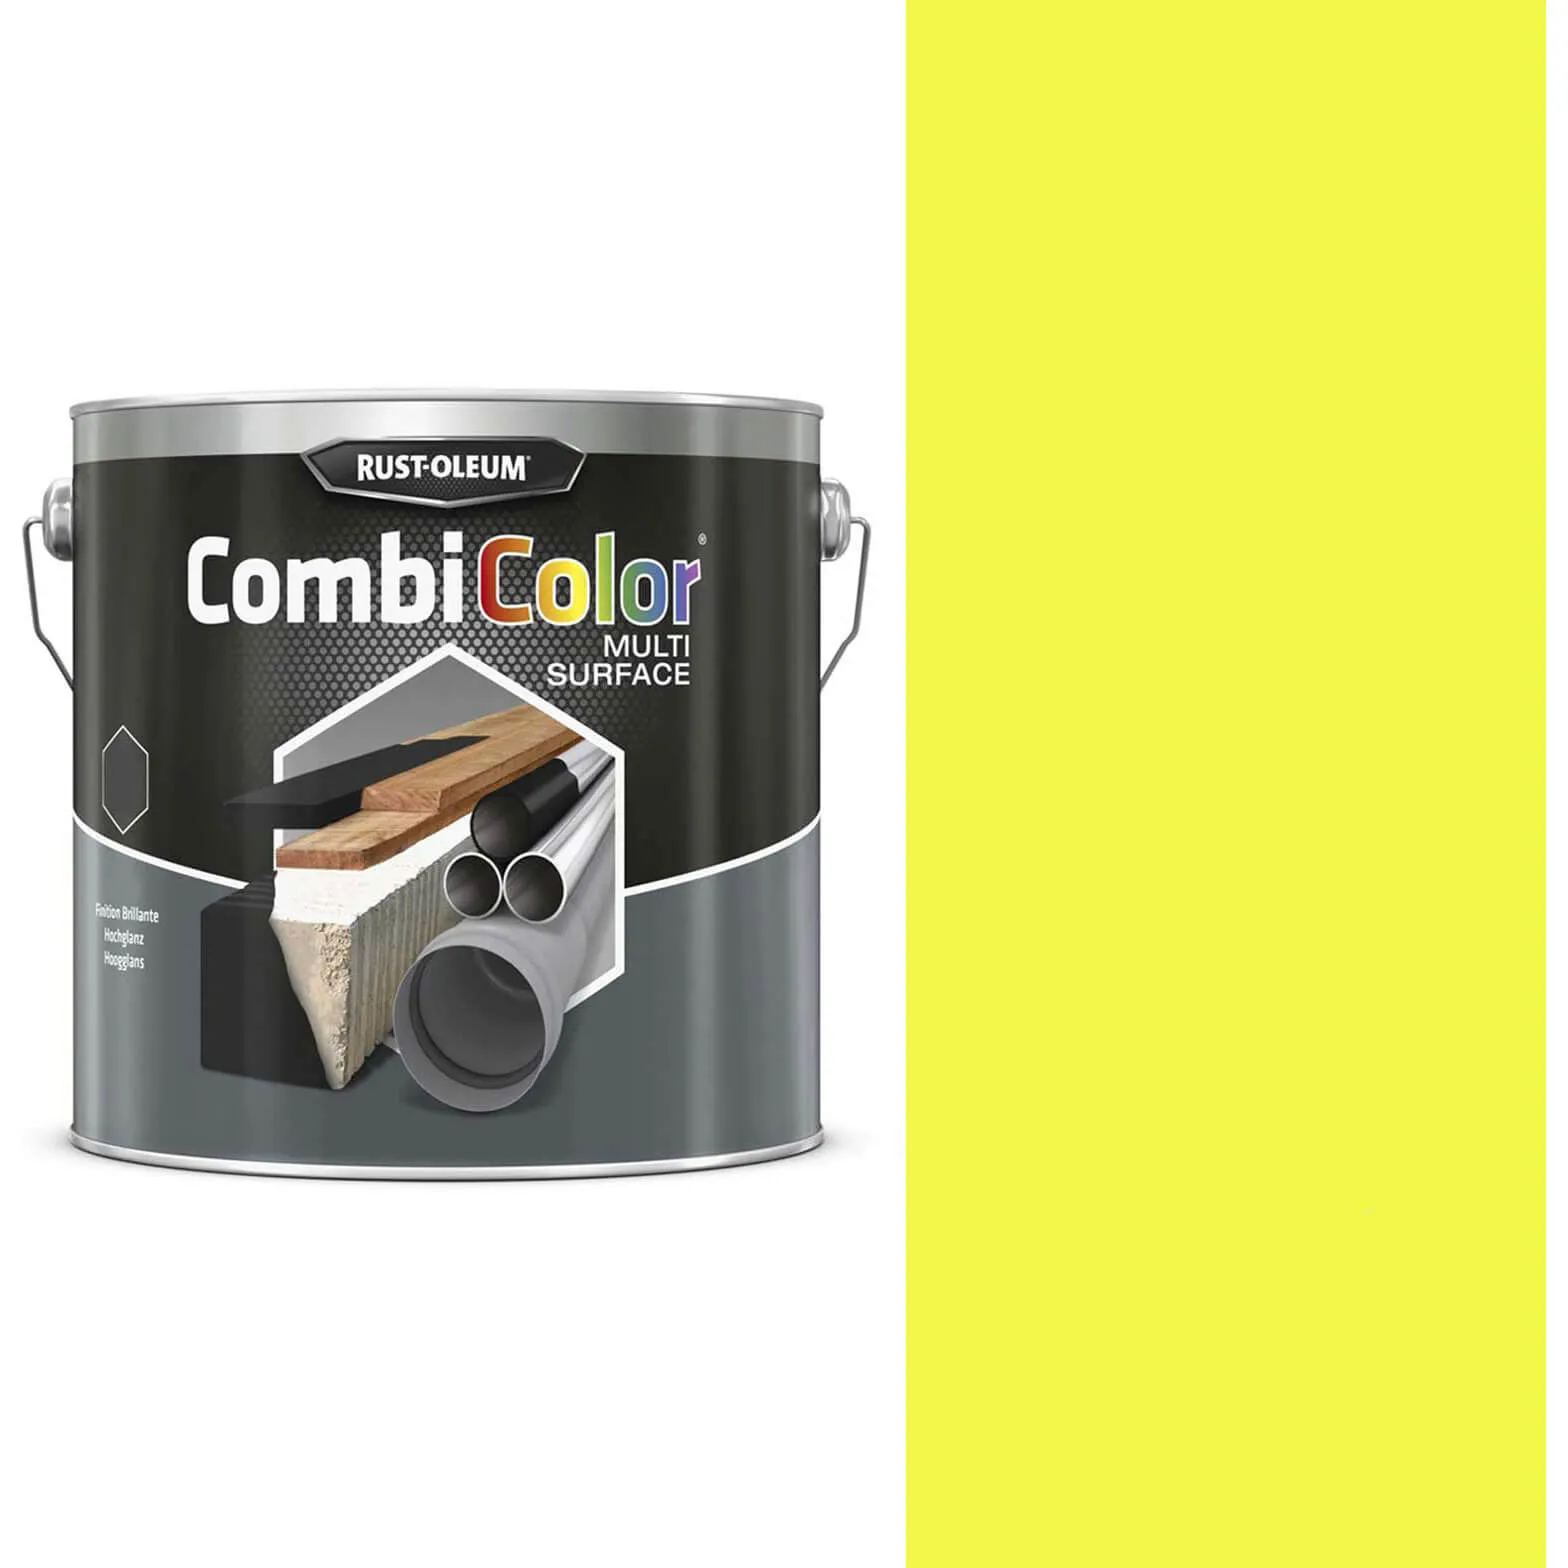 Rust Oleum CombiColor Multi Surface Paint - Light Yellow, 750ml